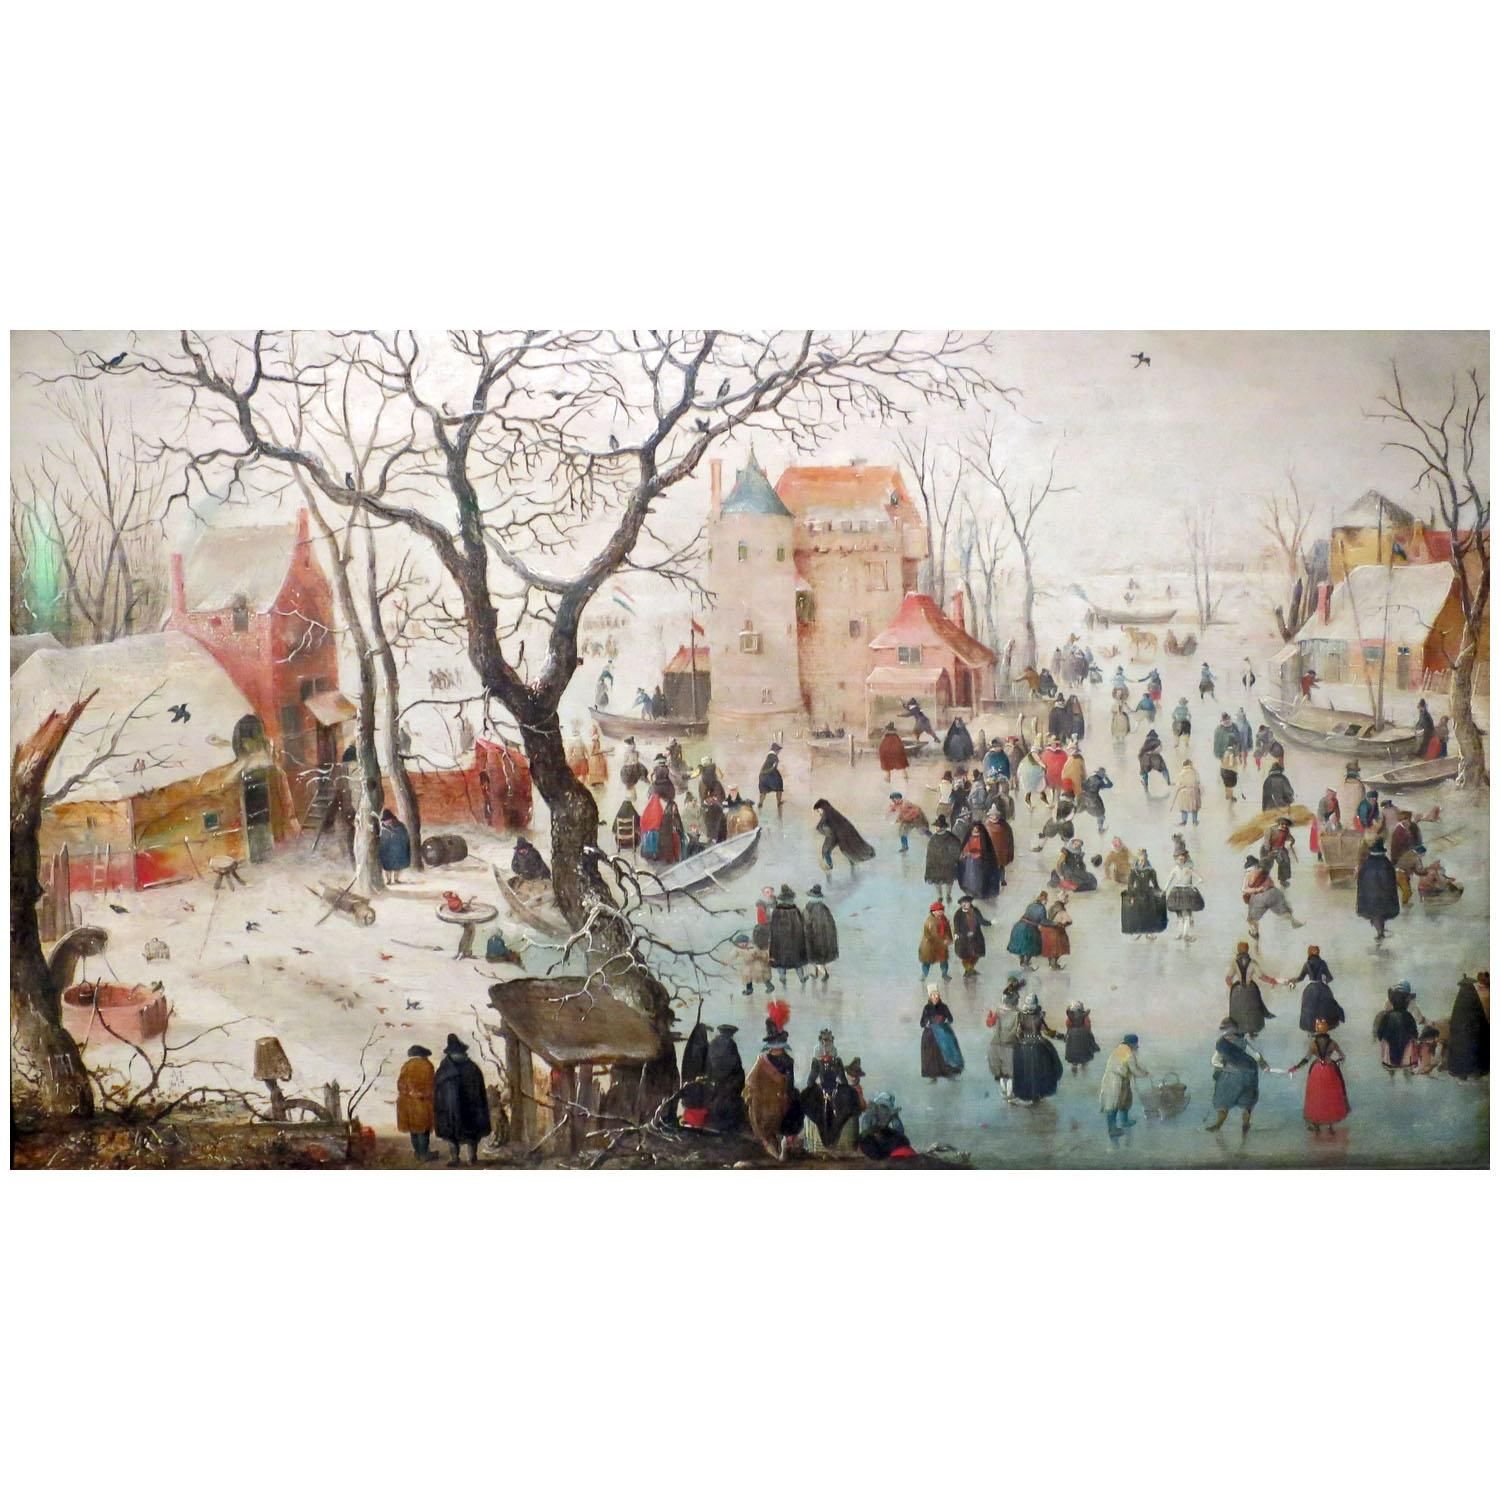 Hendrick Avercamp. Winter Landscape with Ice Skaters. 1608. Kunstmuseum Bergen